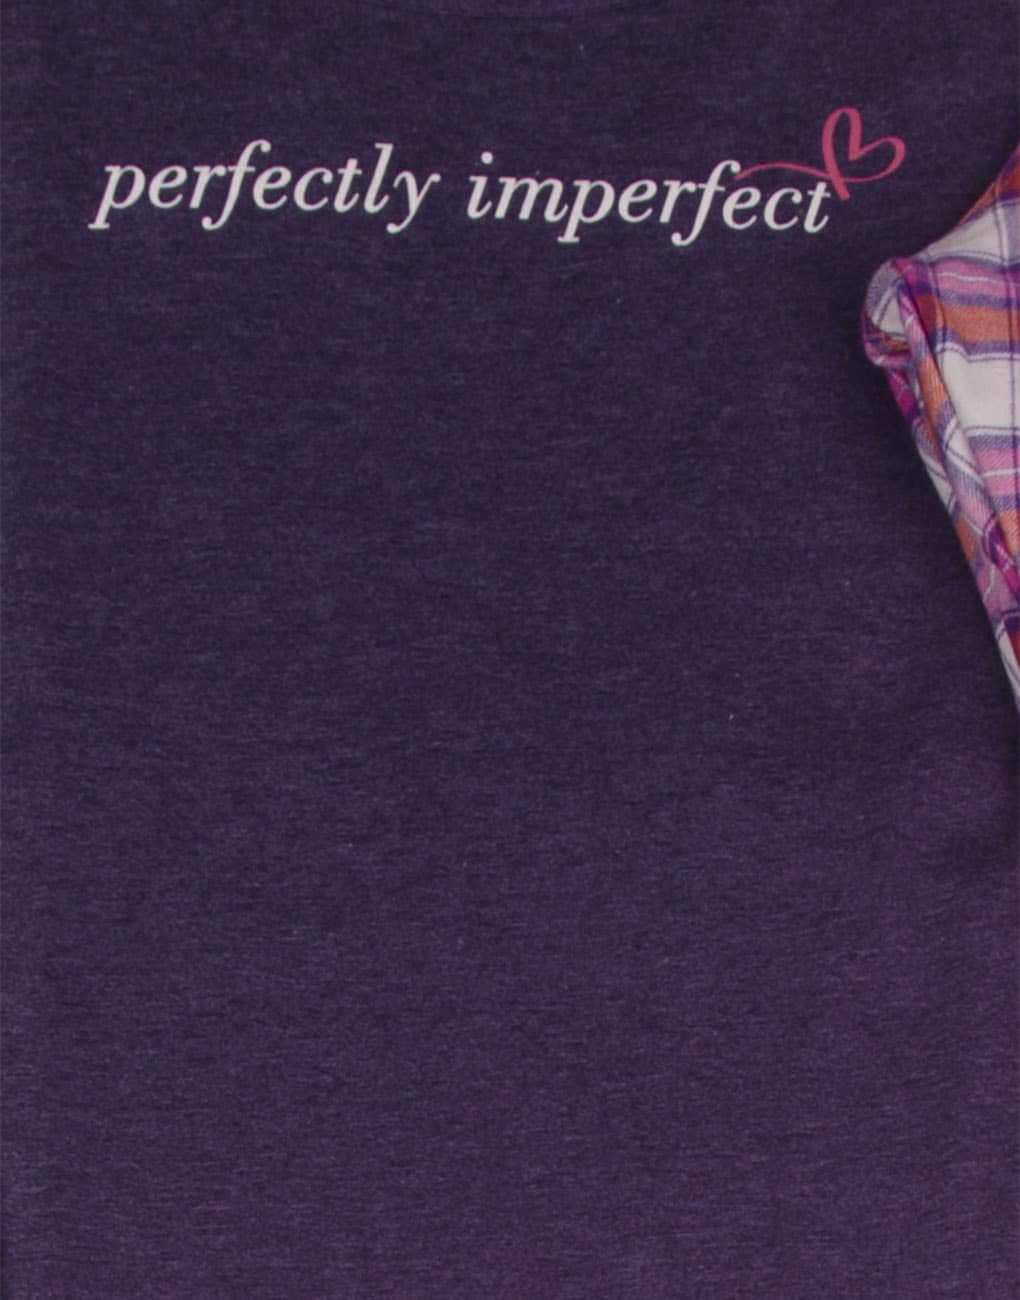 Pijama para dama manga larga “perfectly imperfect”